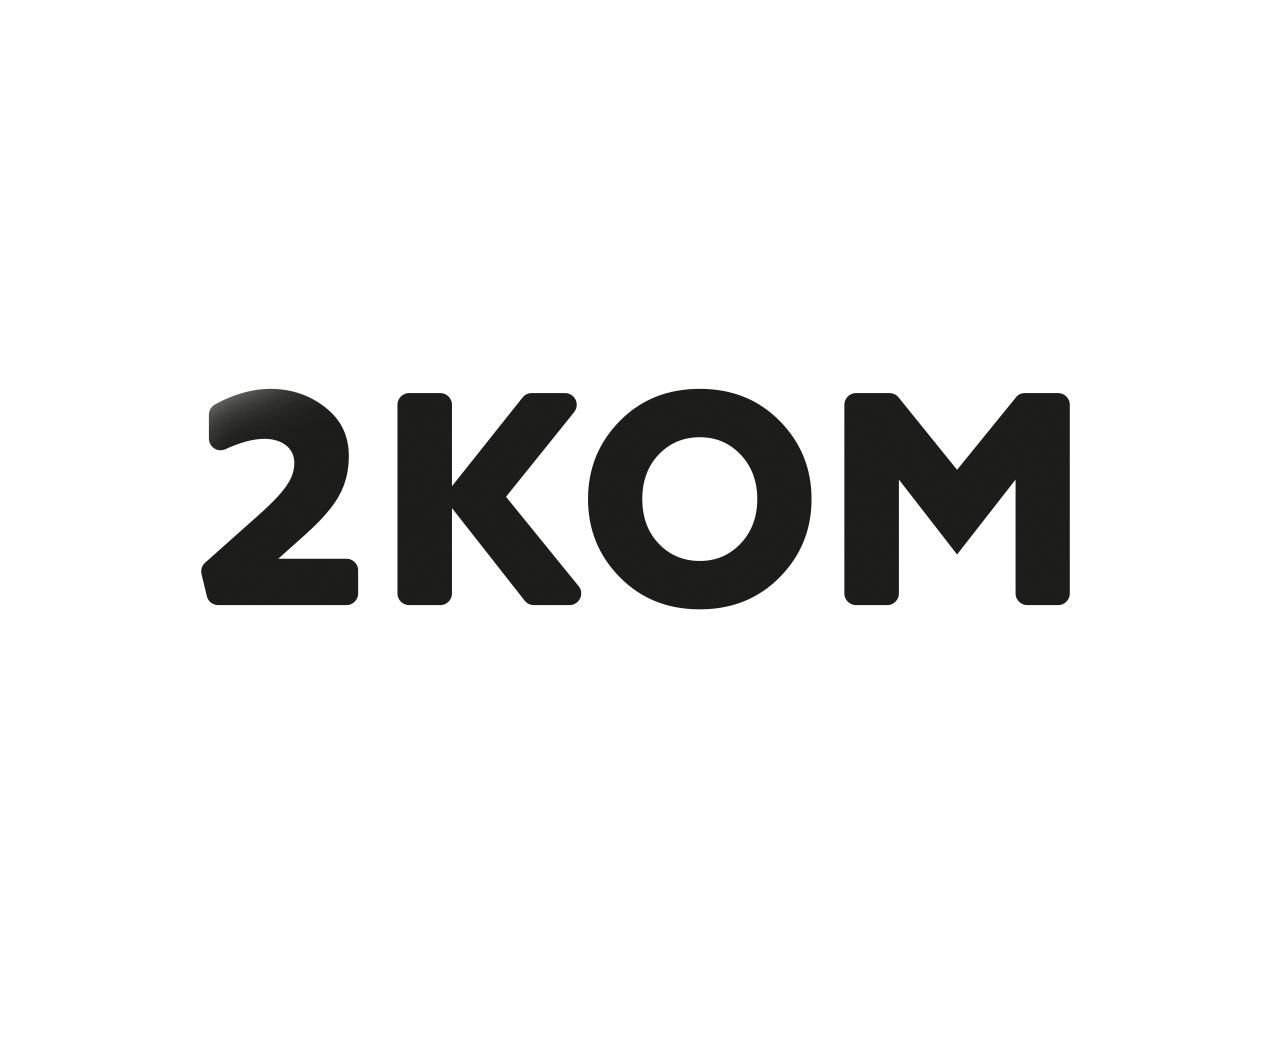 Логотип компании «2КОМ»